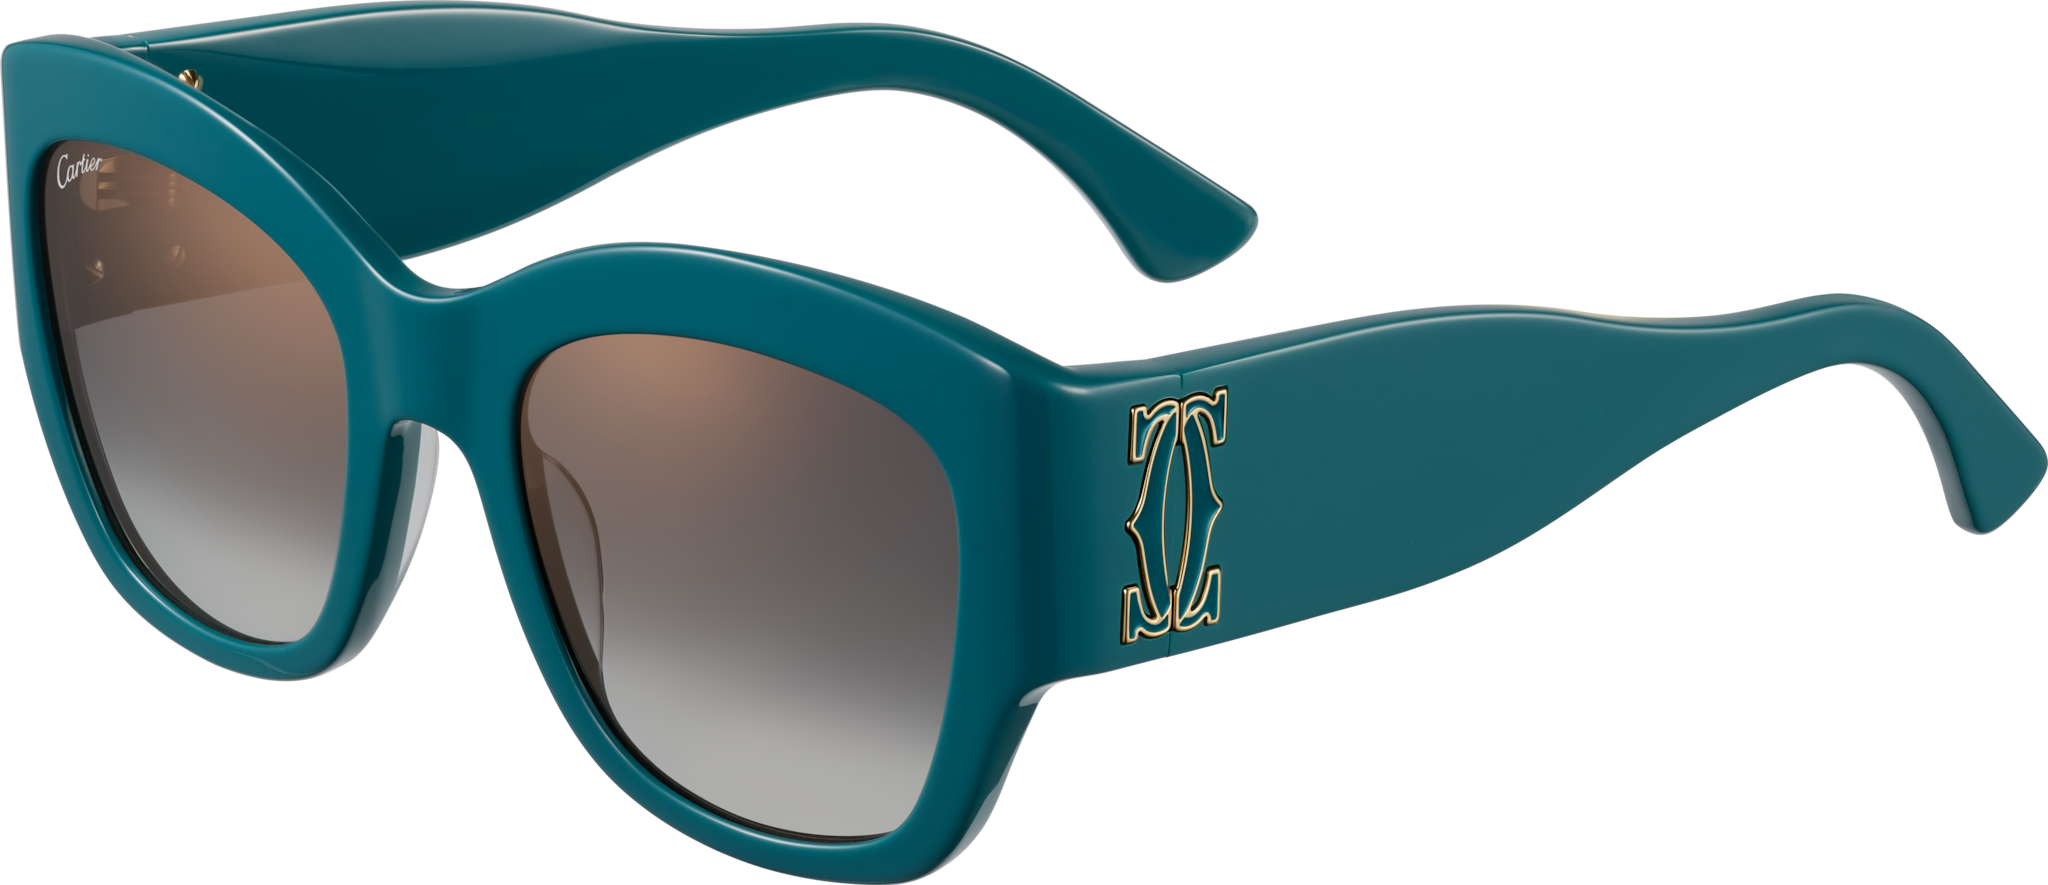 Signature C de Cartier SunglassesPetrol acetate, grey lenses